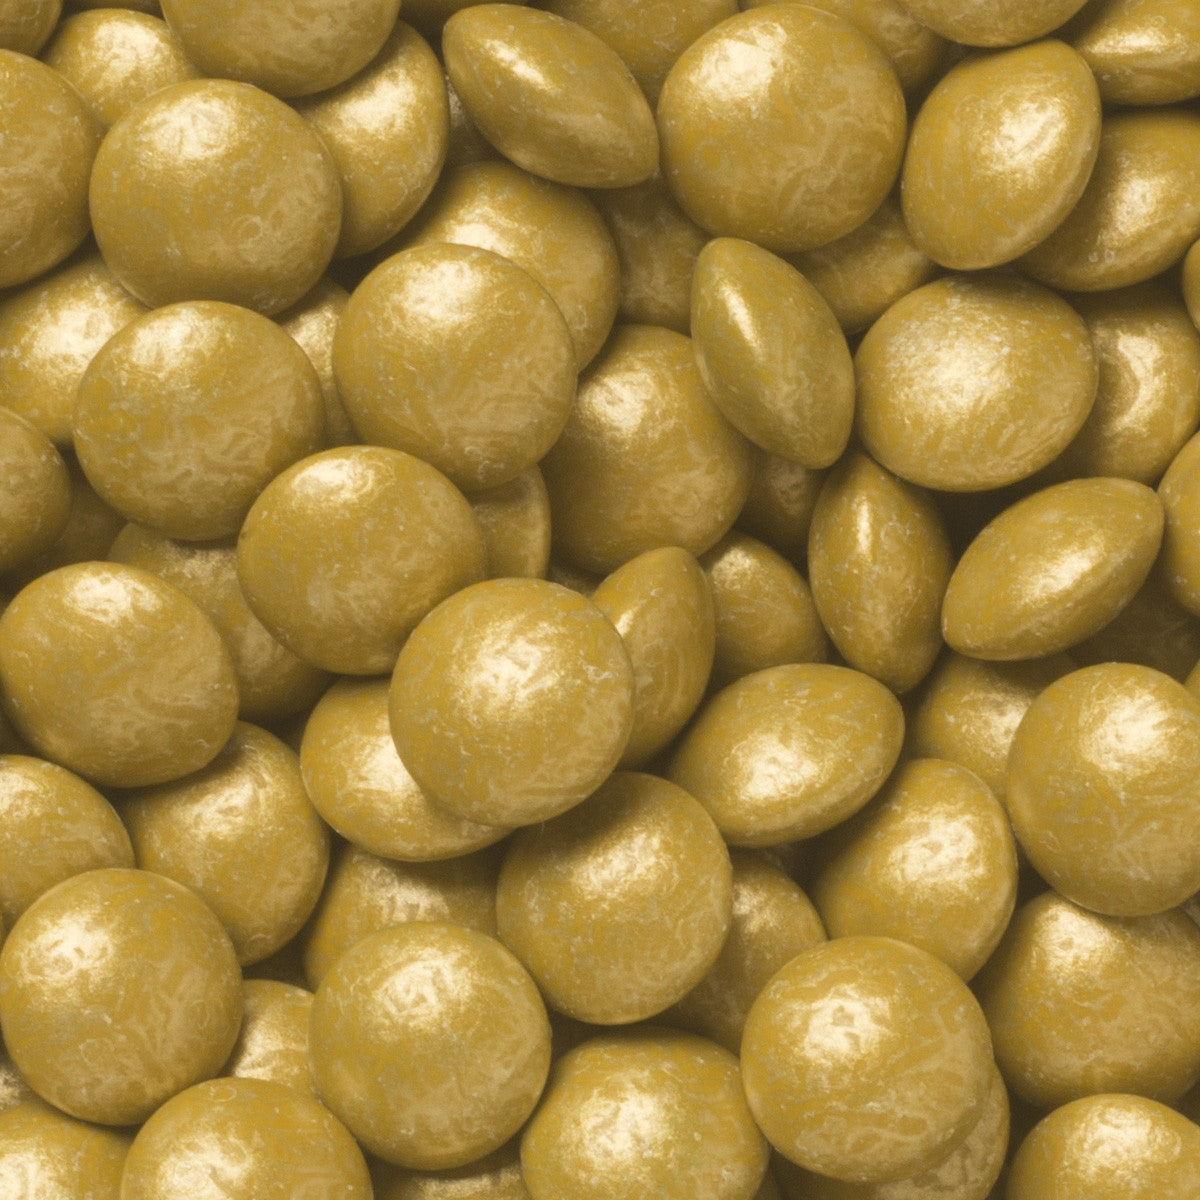 Lustrous Gold Milkies - *200 Lb. Minimum Order*